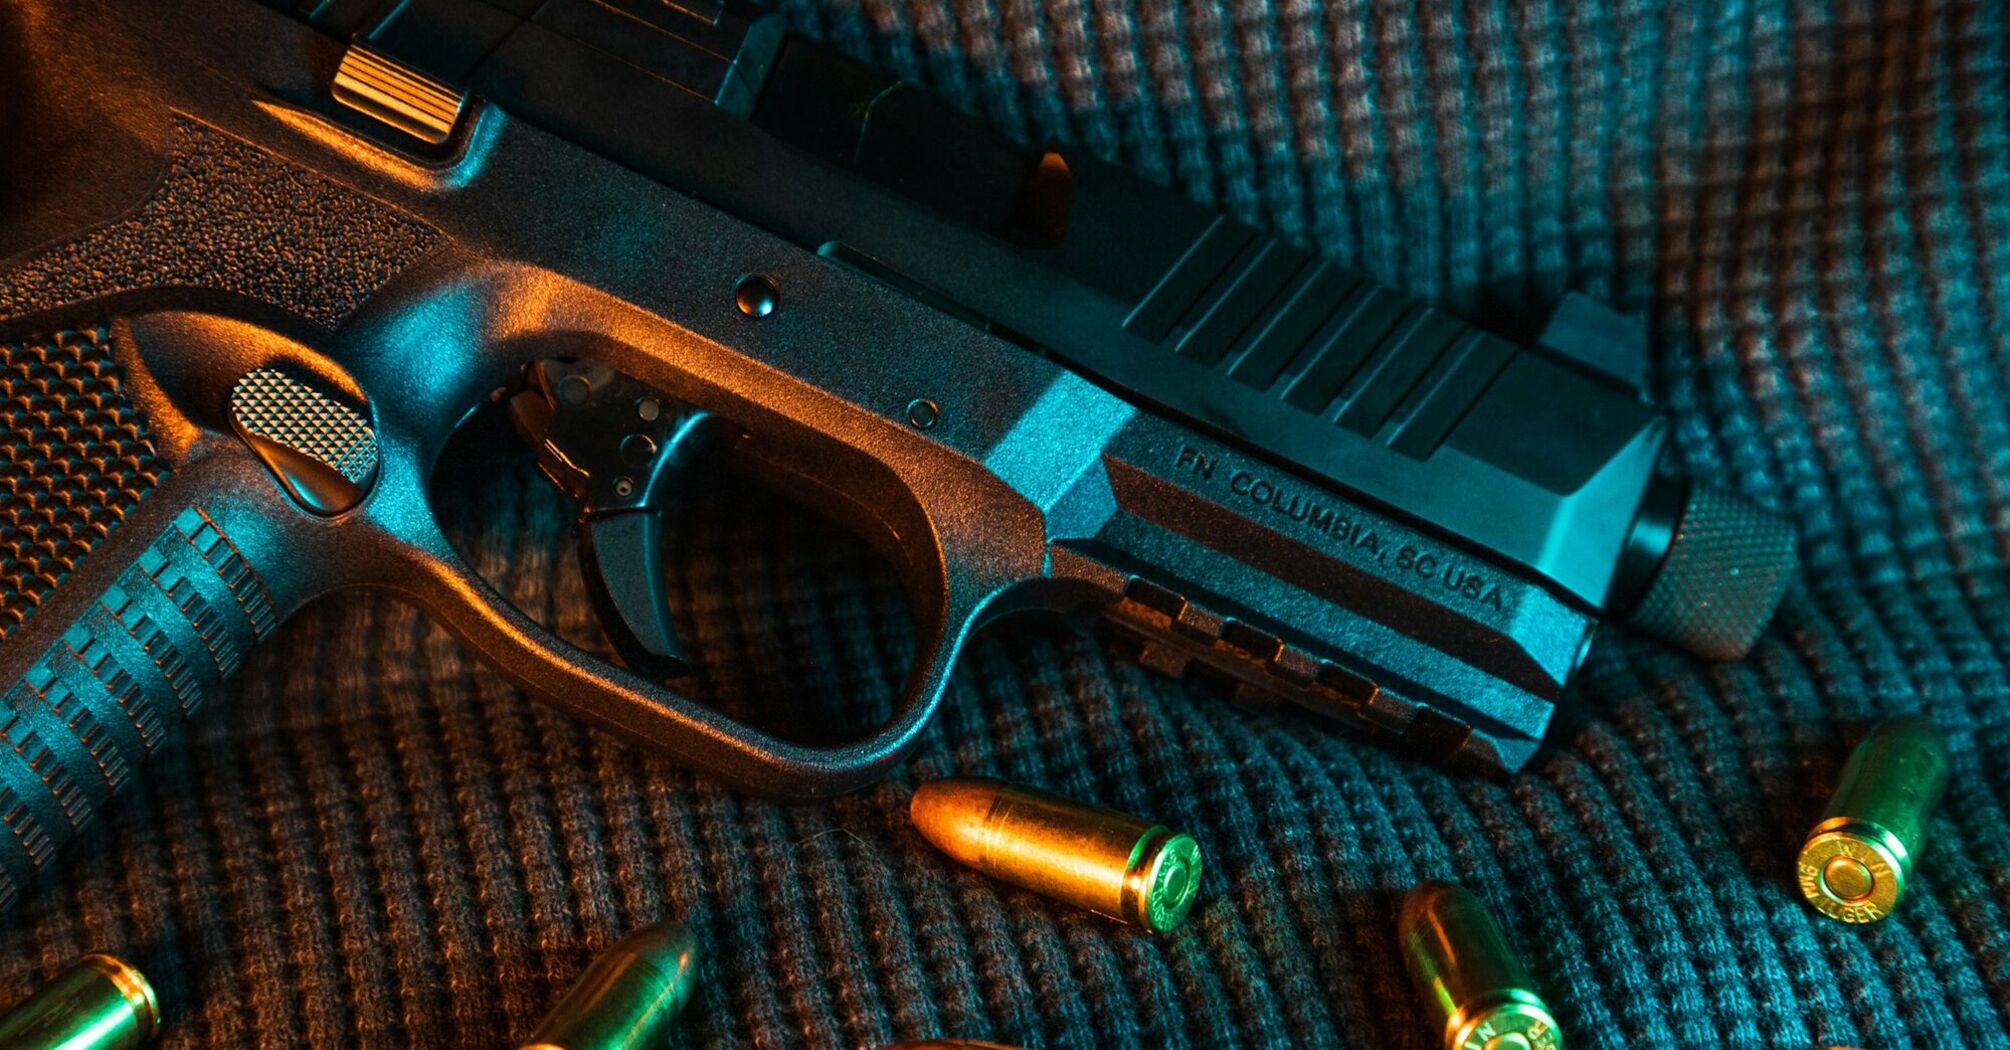 Handgun with ammunition on textured fabric